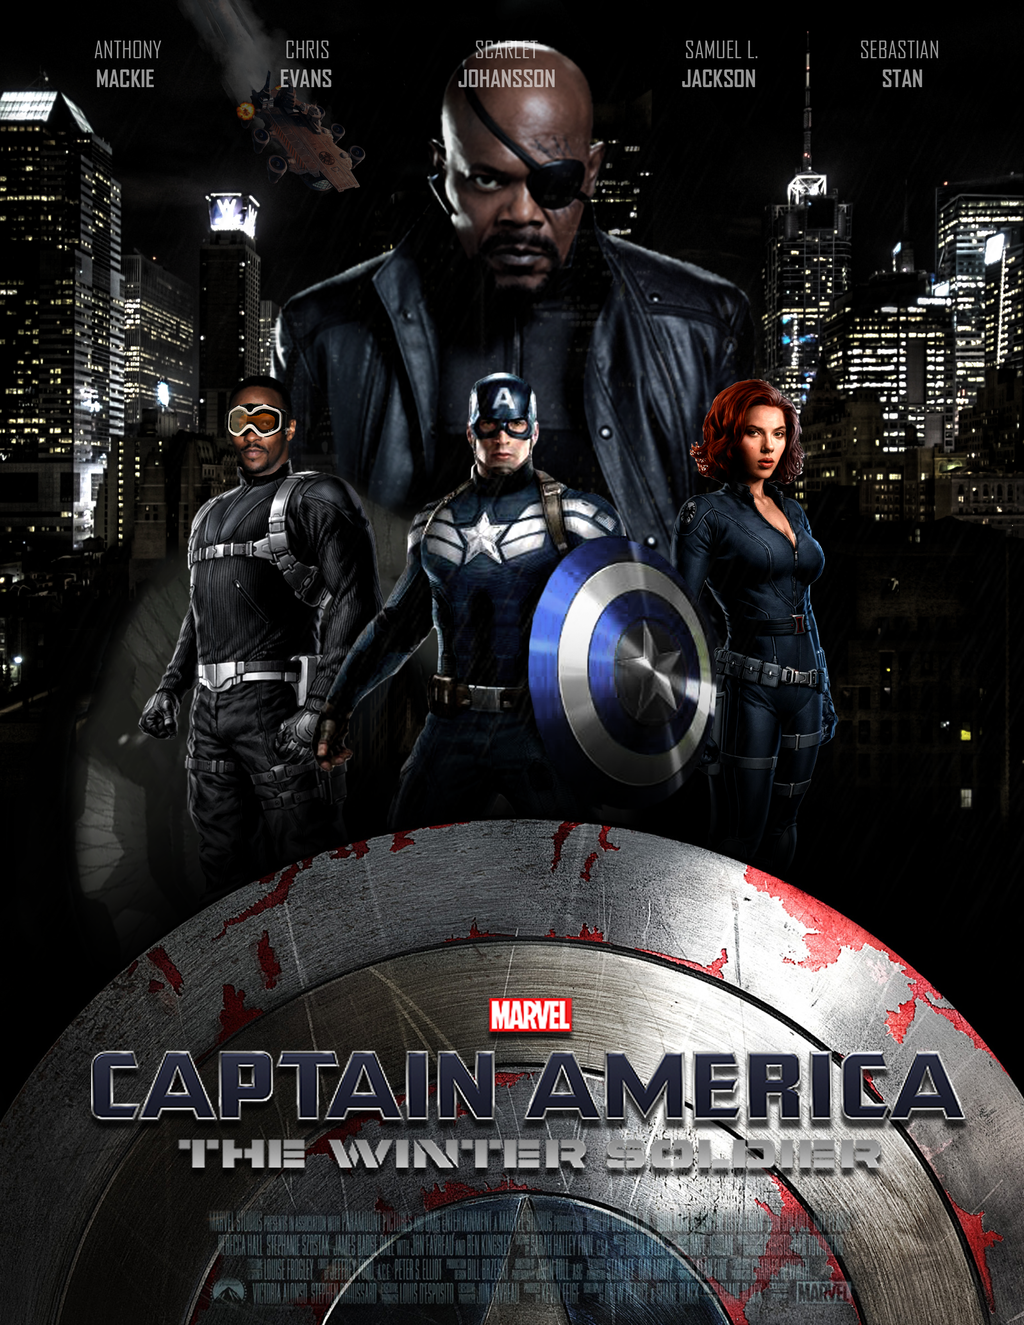 Full Movie Captain America: The Winter Soldier Full Streaming